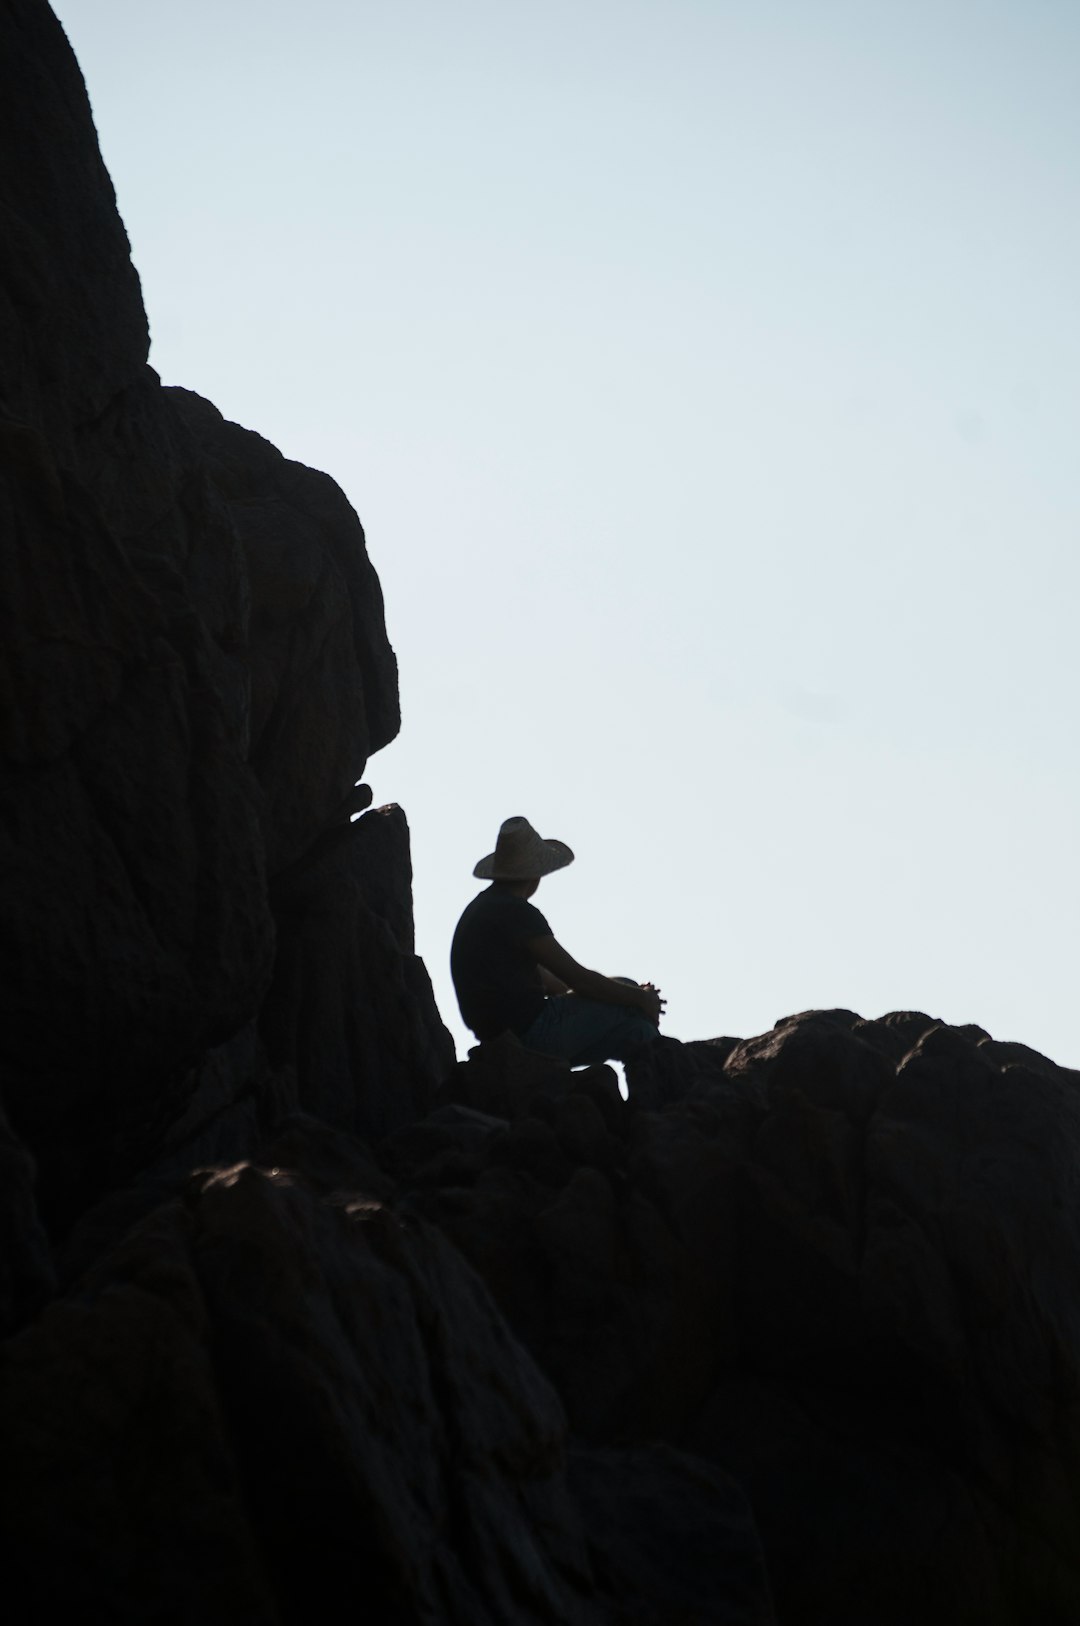 man sitting on rock